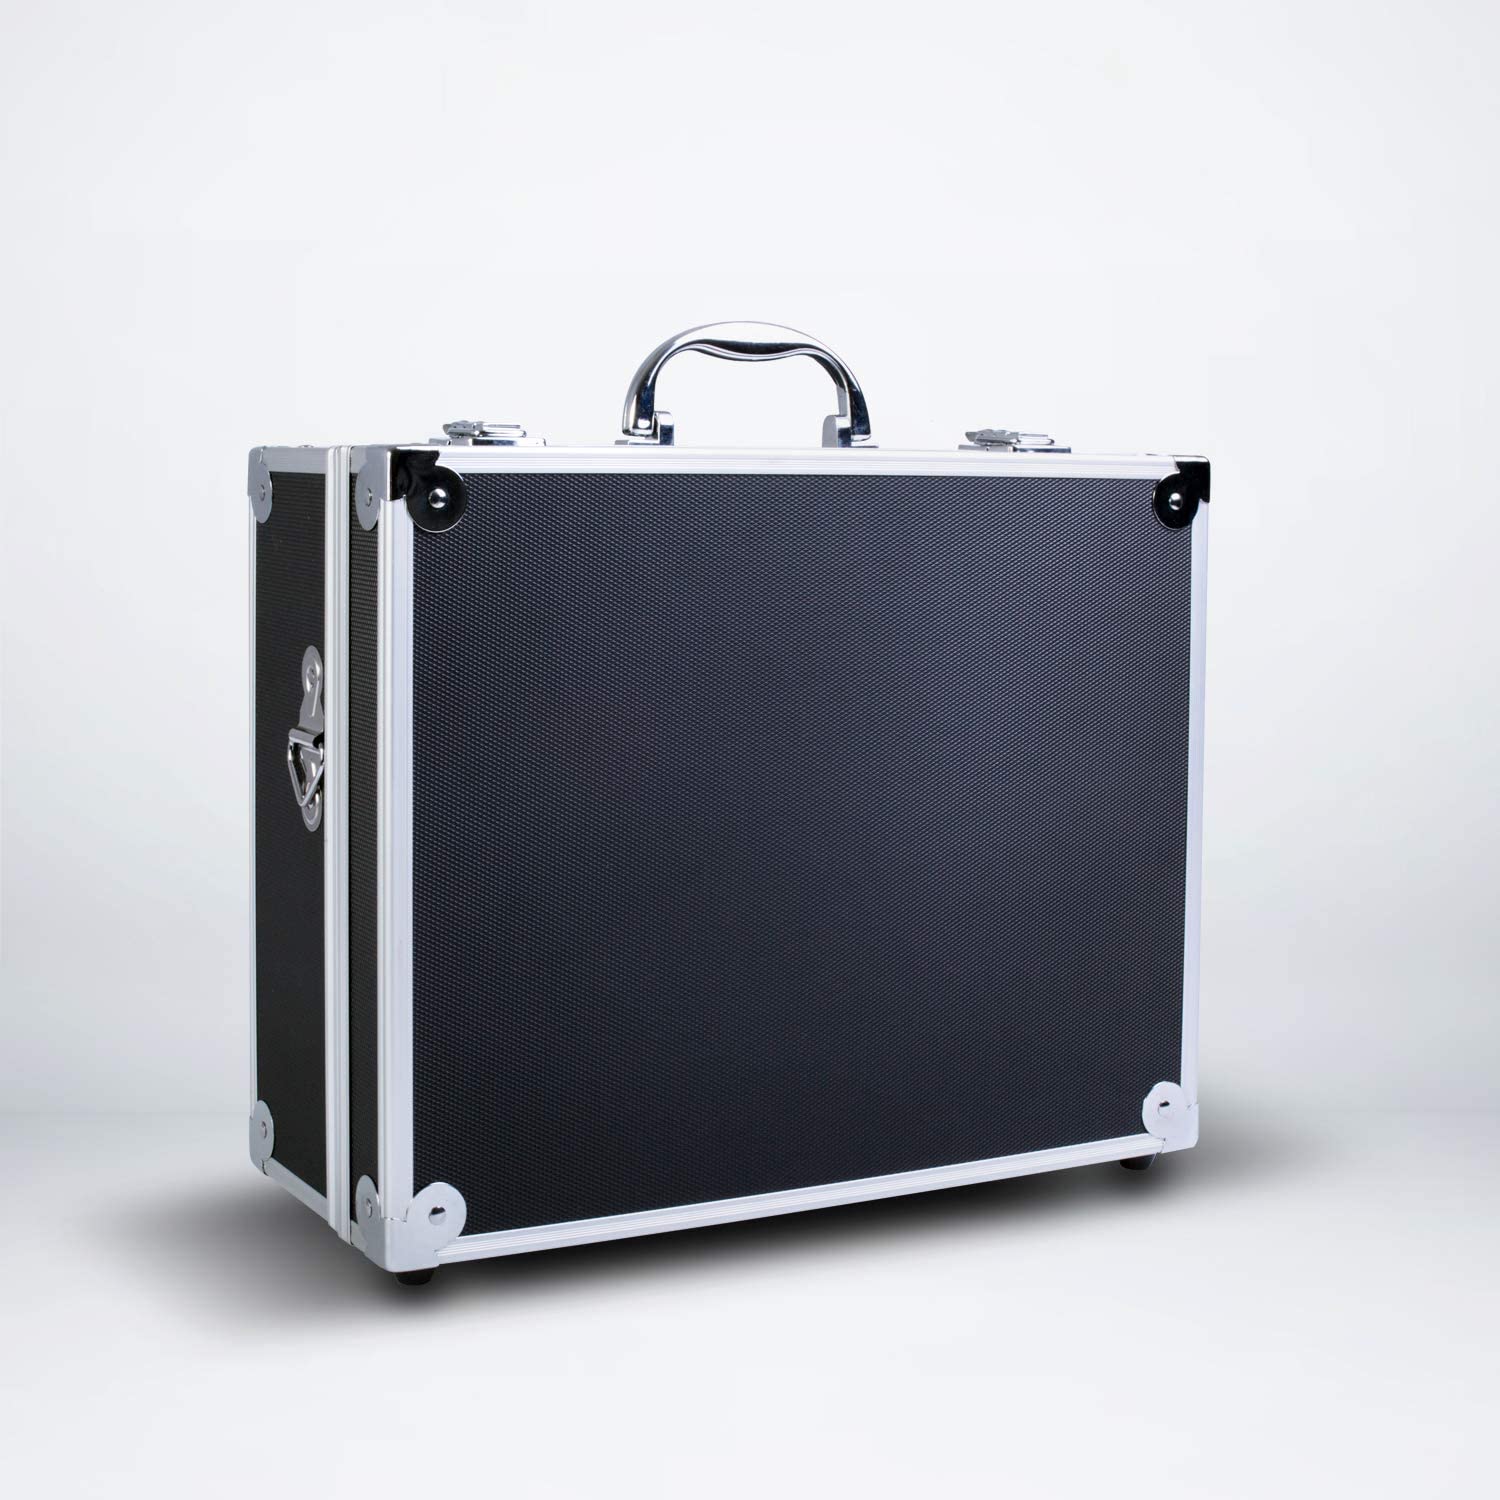 storage box 27 x 24.6 x 12.4 cm Black Equipment Photography Waterproof with Foam Flight Case Transport Hard Case Galapara Technicians Tool Box